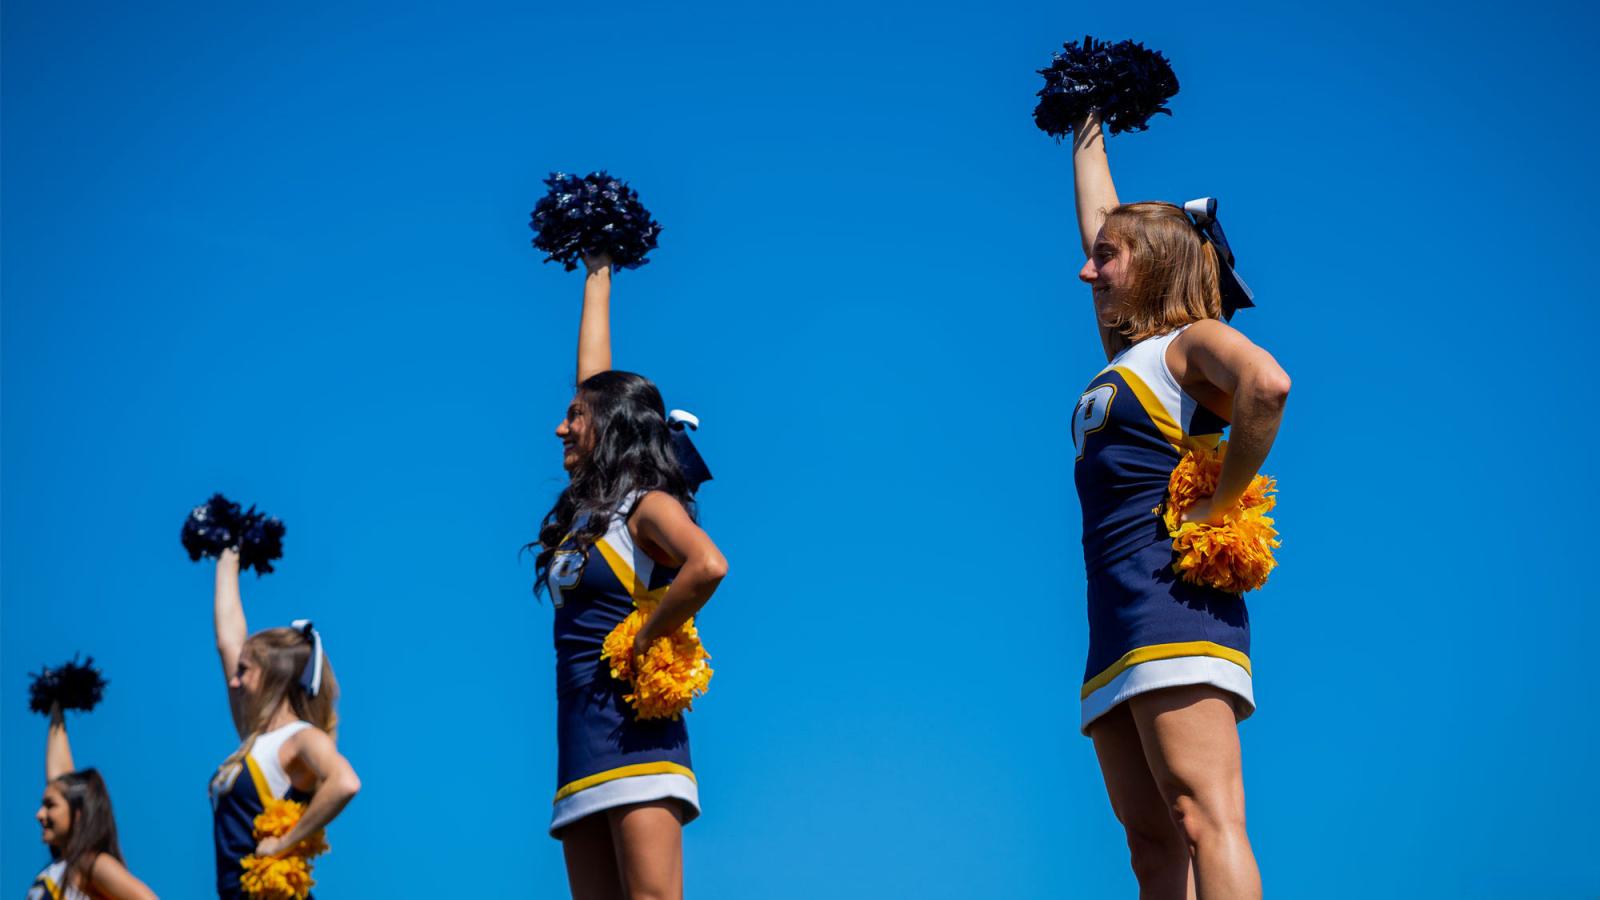 pace cheerleaders against a blue sky